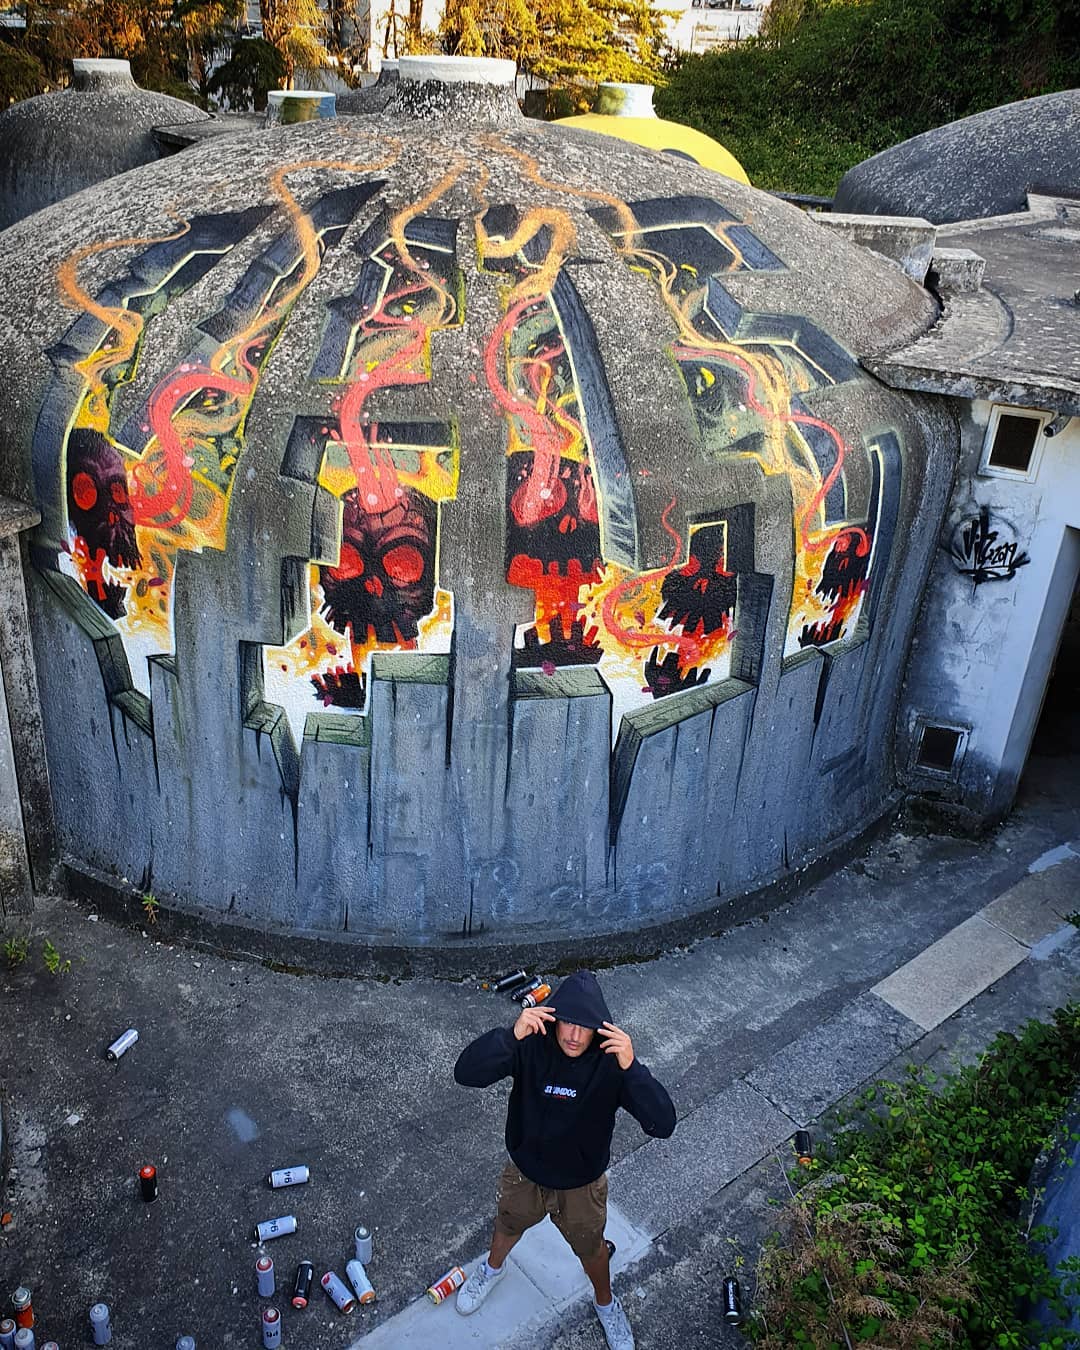 Impressive Painted Illusions by Portuguese Graffiti Artist Vile